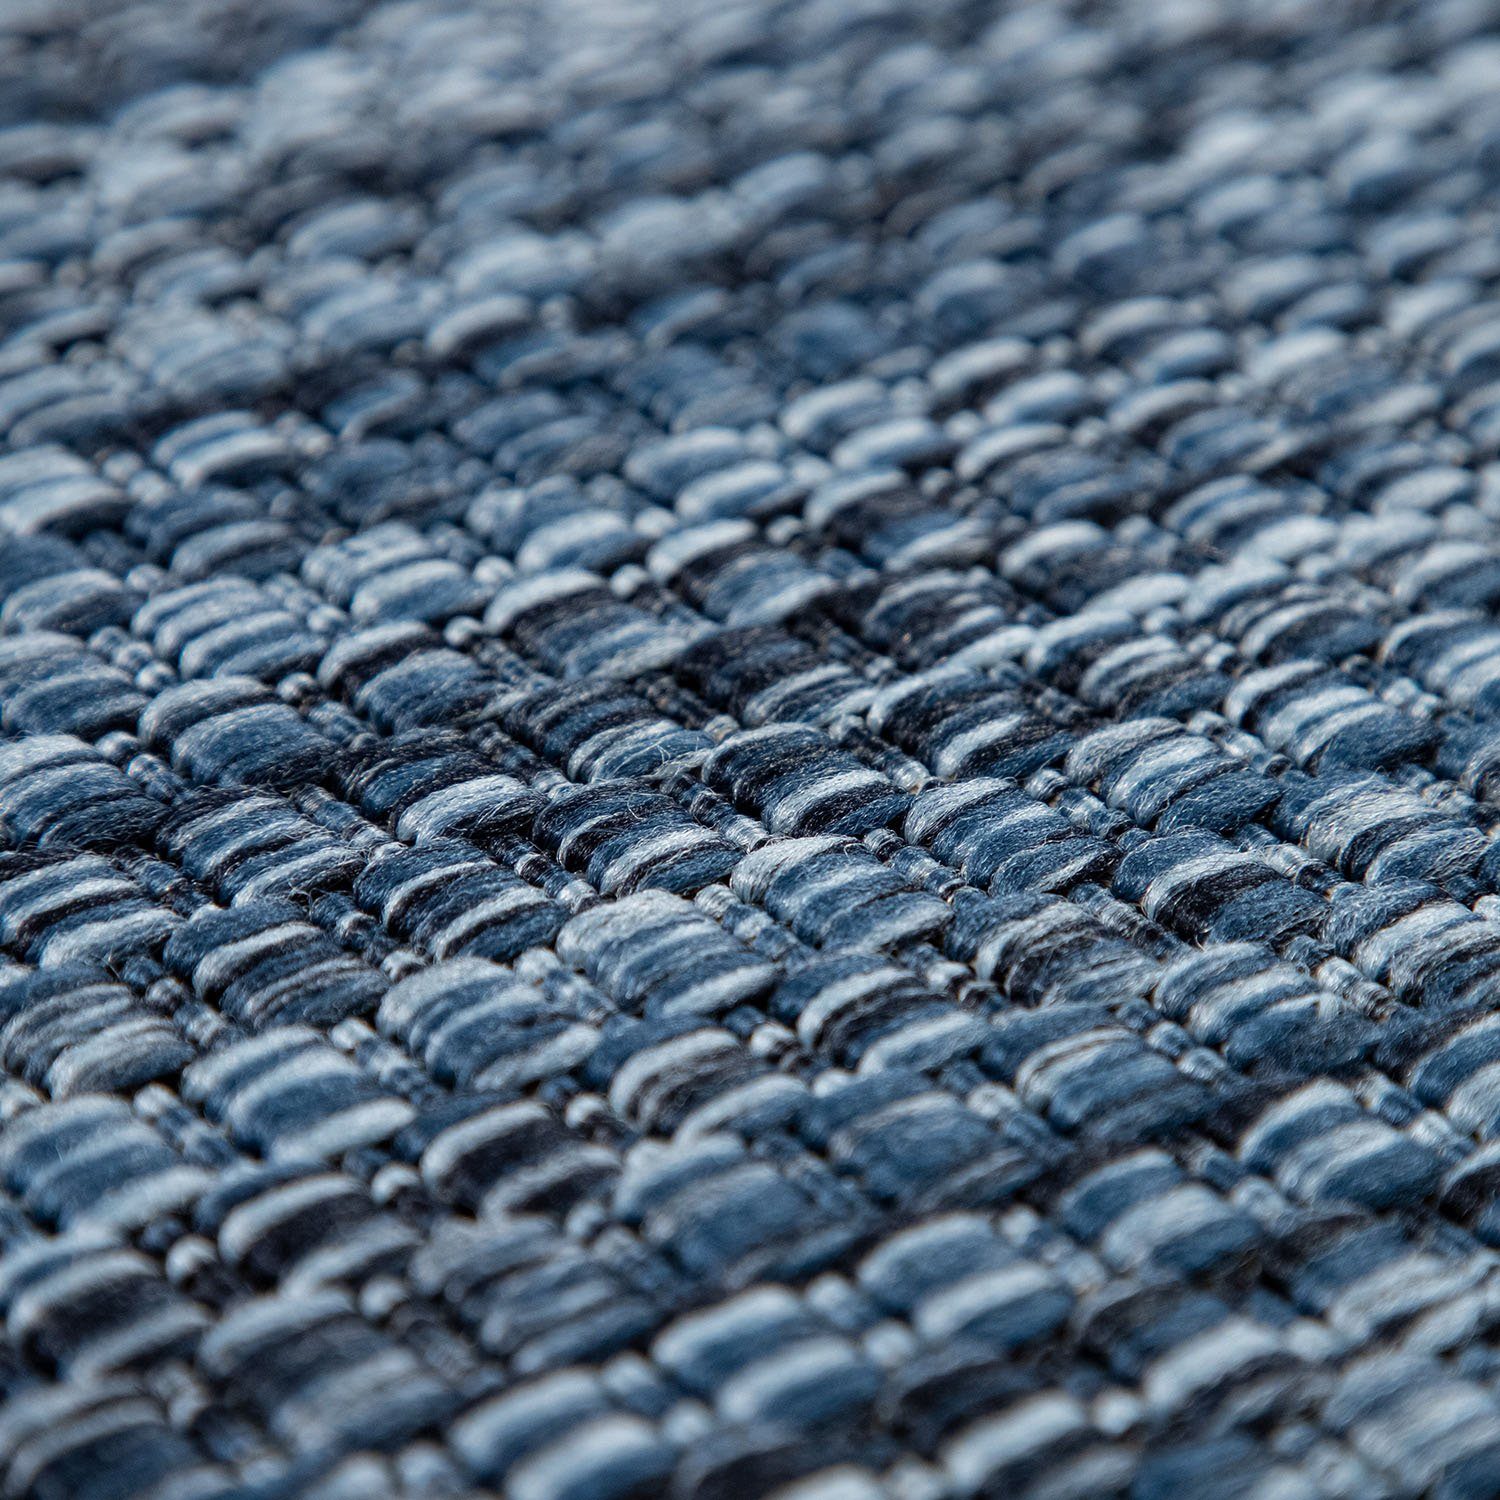 Teppich Venedig, Home Sisal-Optik, Höhe: Outdoor blau meliert, Flachgewebe, 4 mm, UV-beständig, geeignet affaire, rechteckig